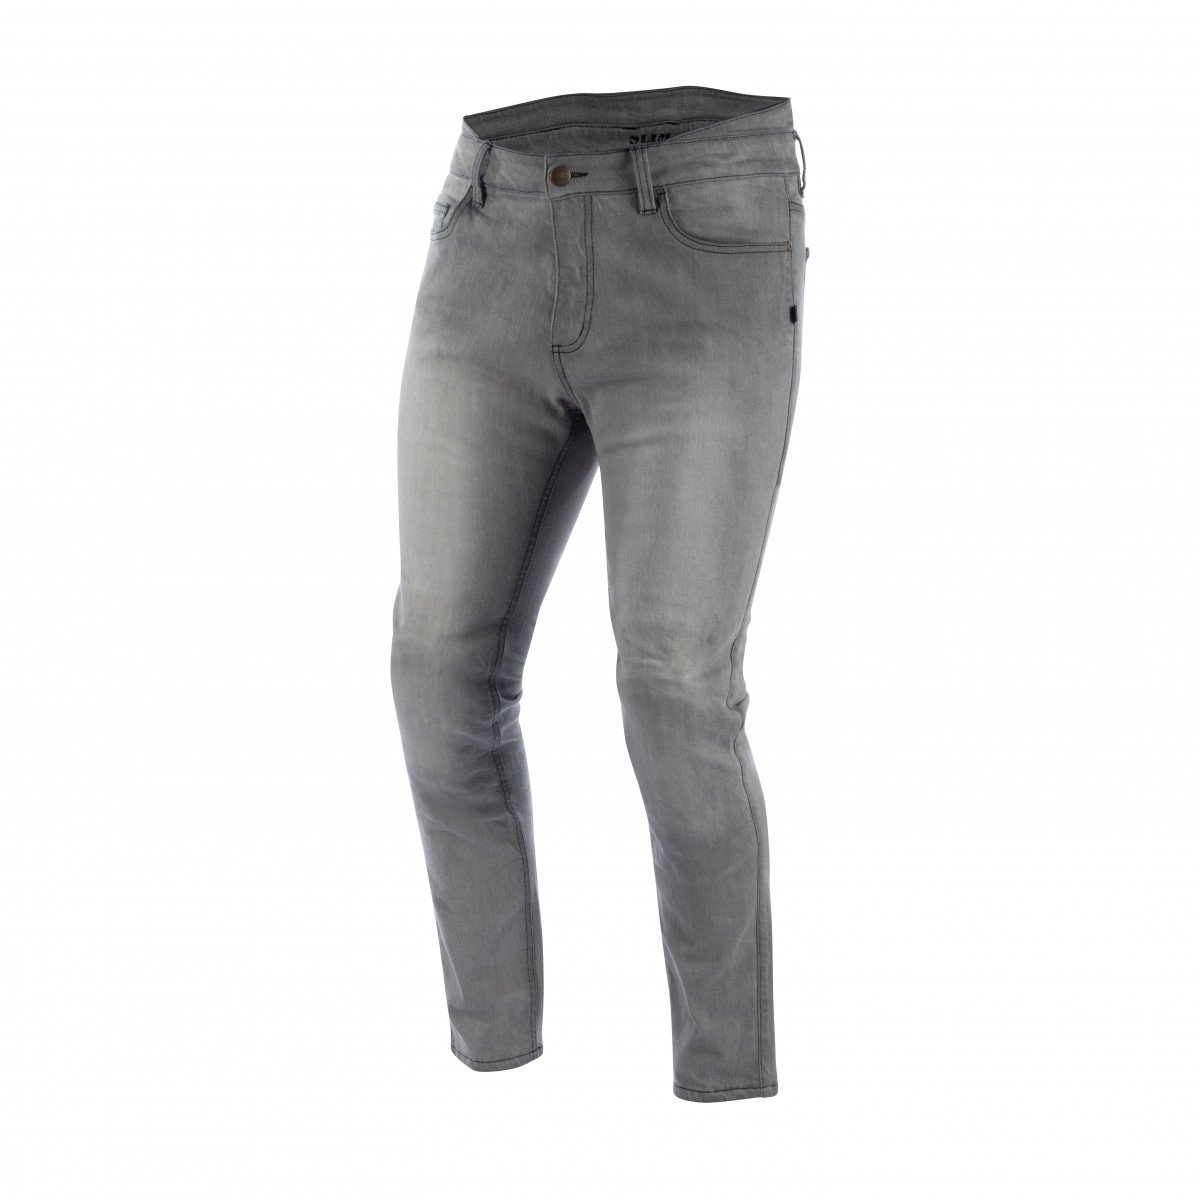 Image of Bering Trousers Twinner Grey Size 4XL ID 3660815168332